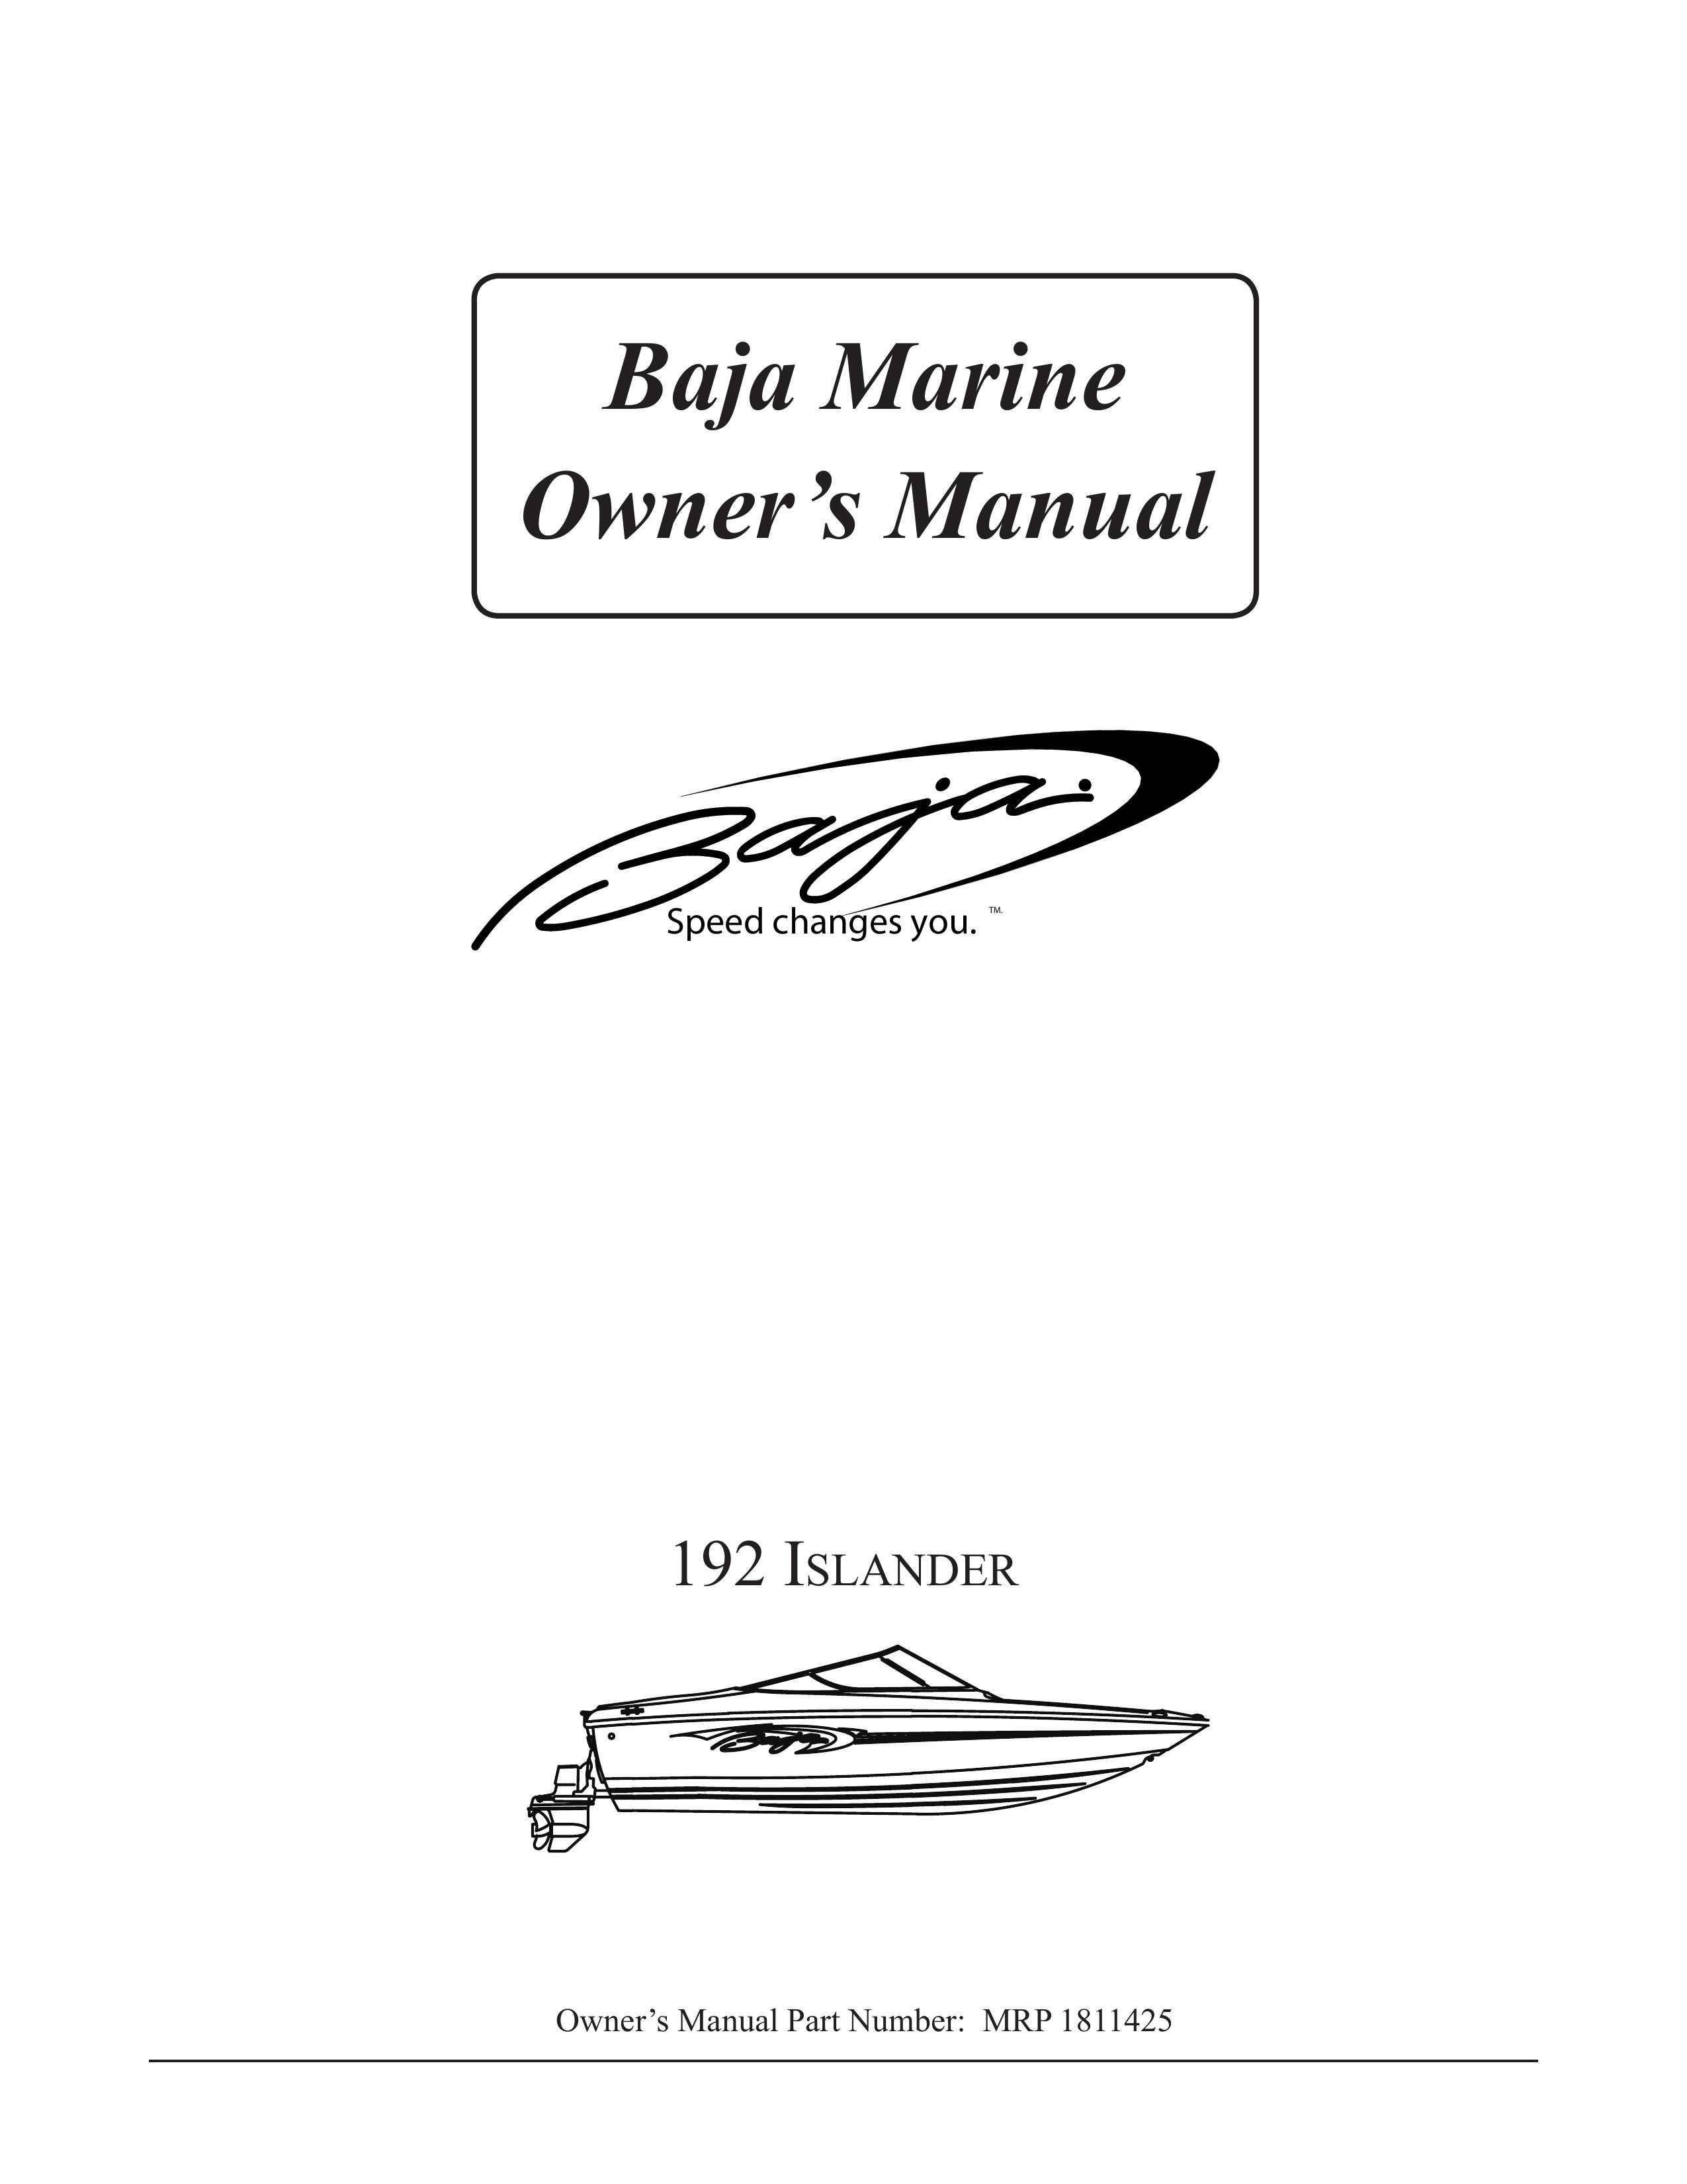 Baja Marine 192 Islander Boat User Manual